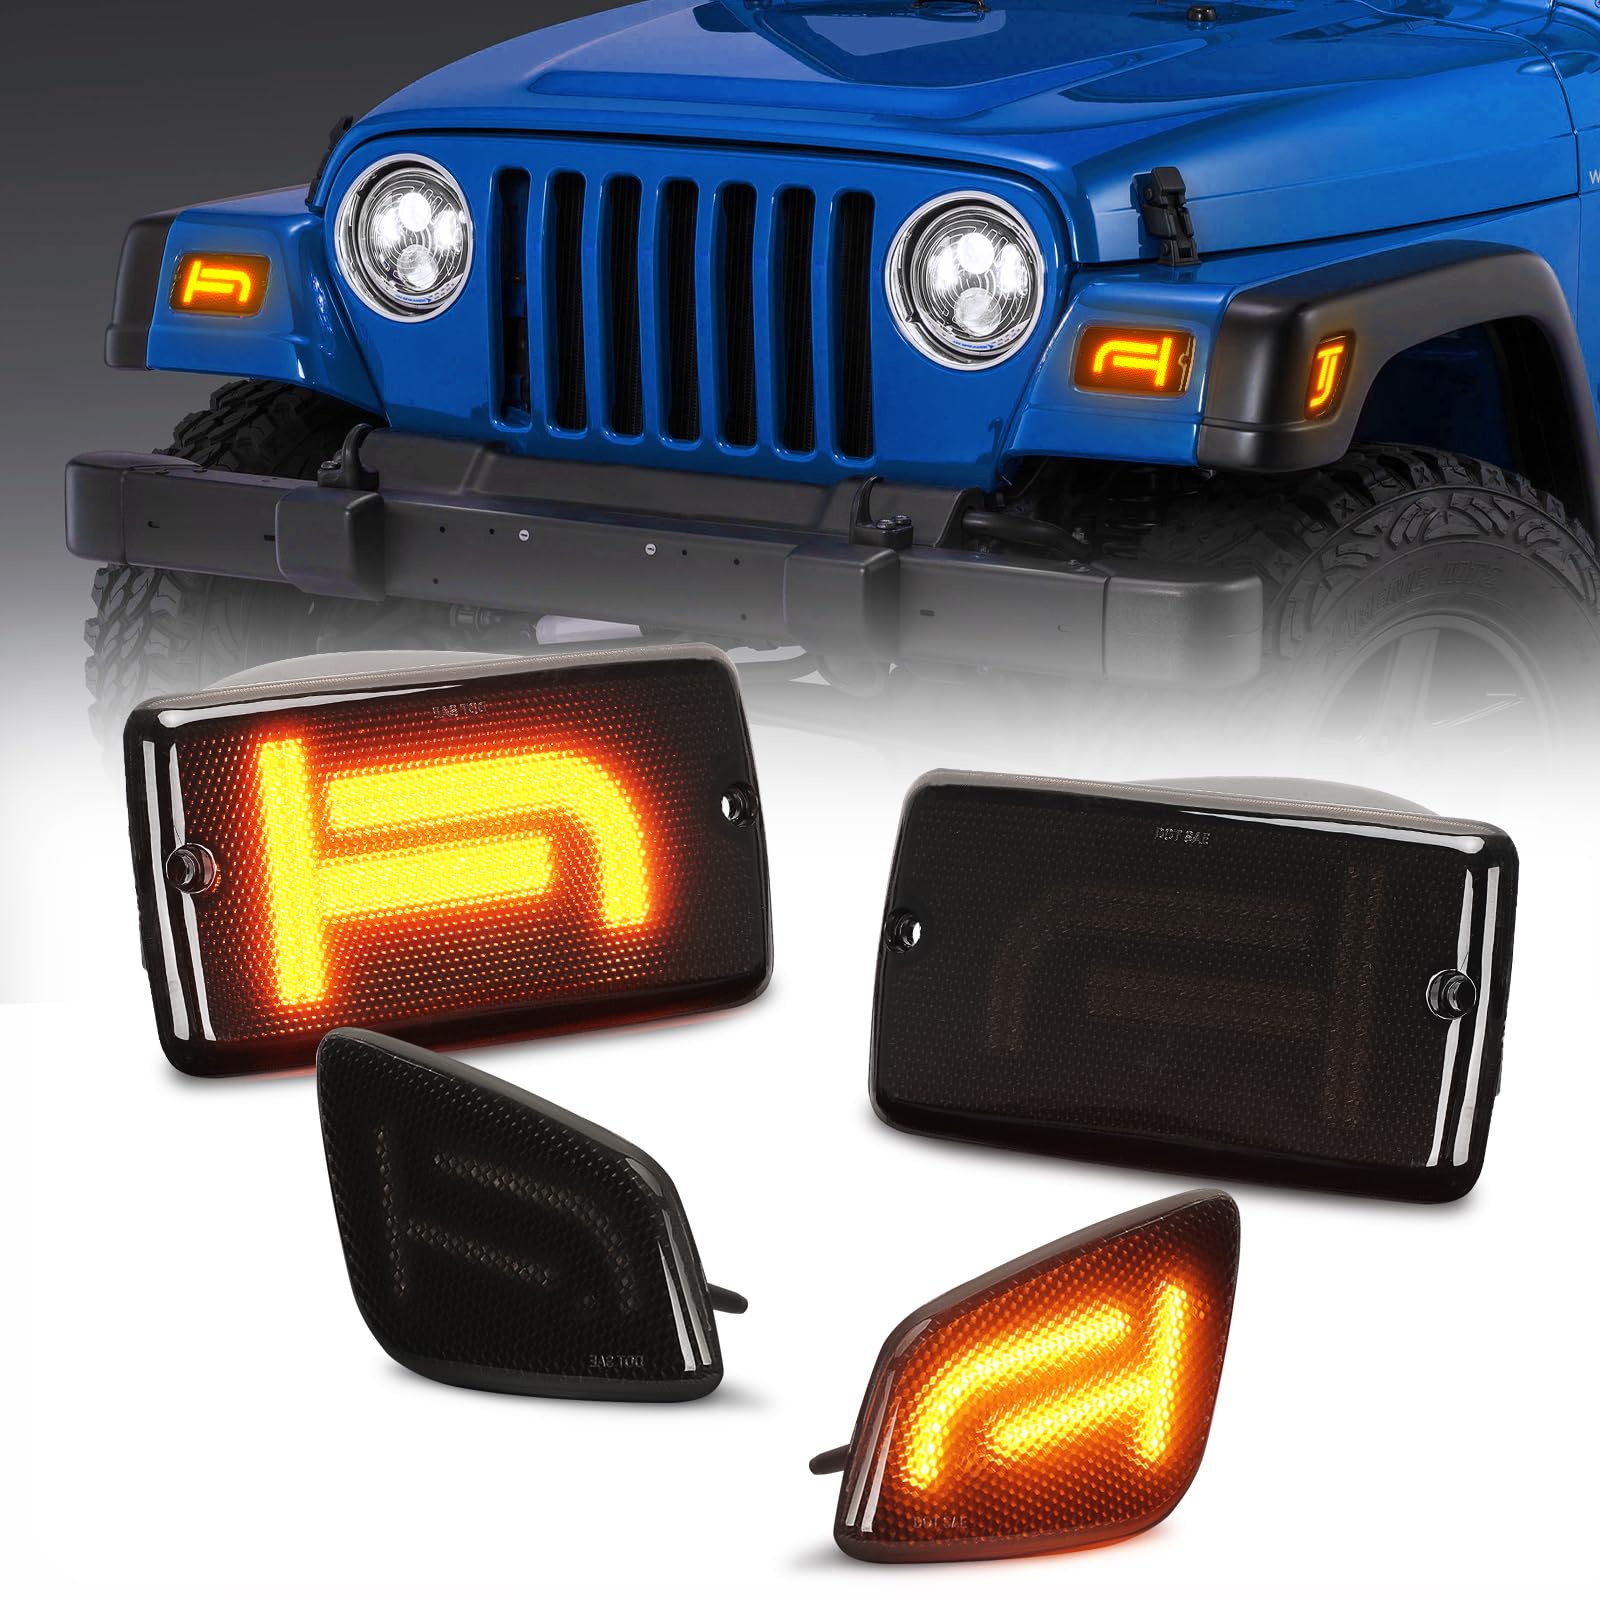 Suparee Jeep New LED Turn Signal & Side Marker Lights for Wrangler TJ